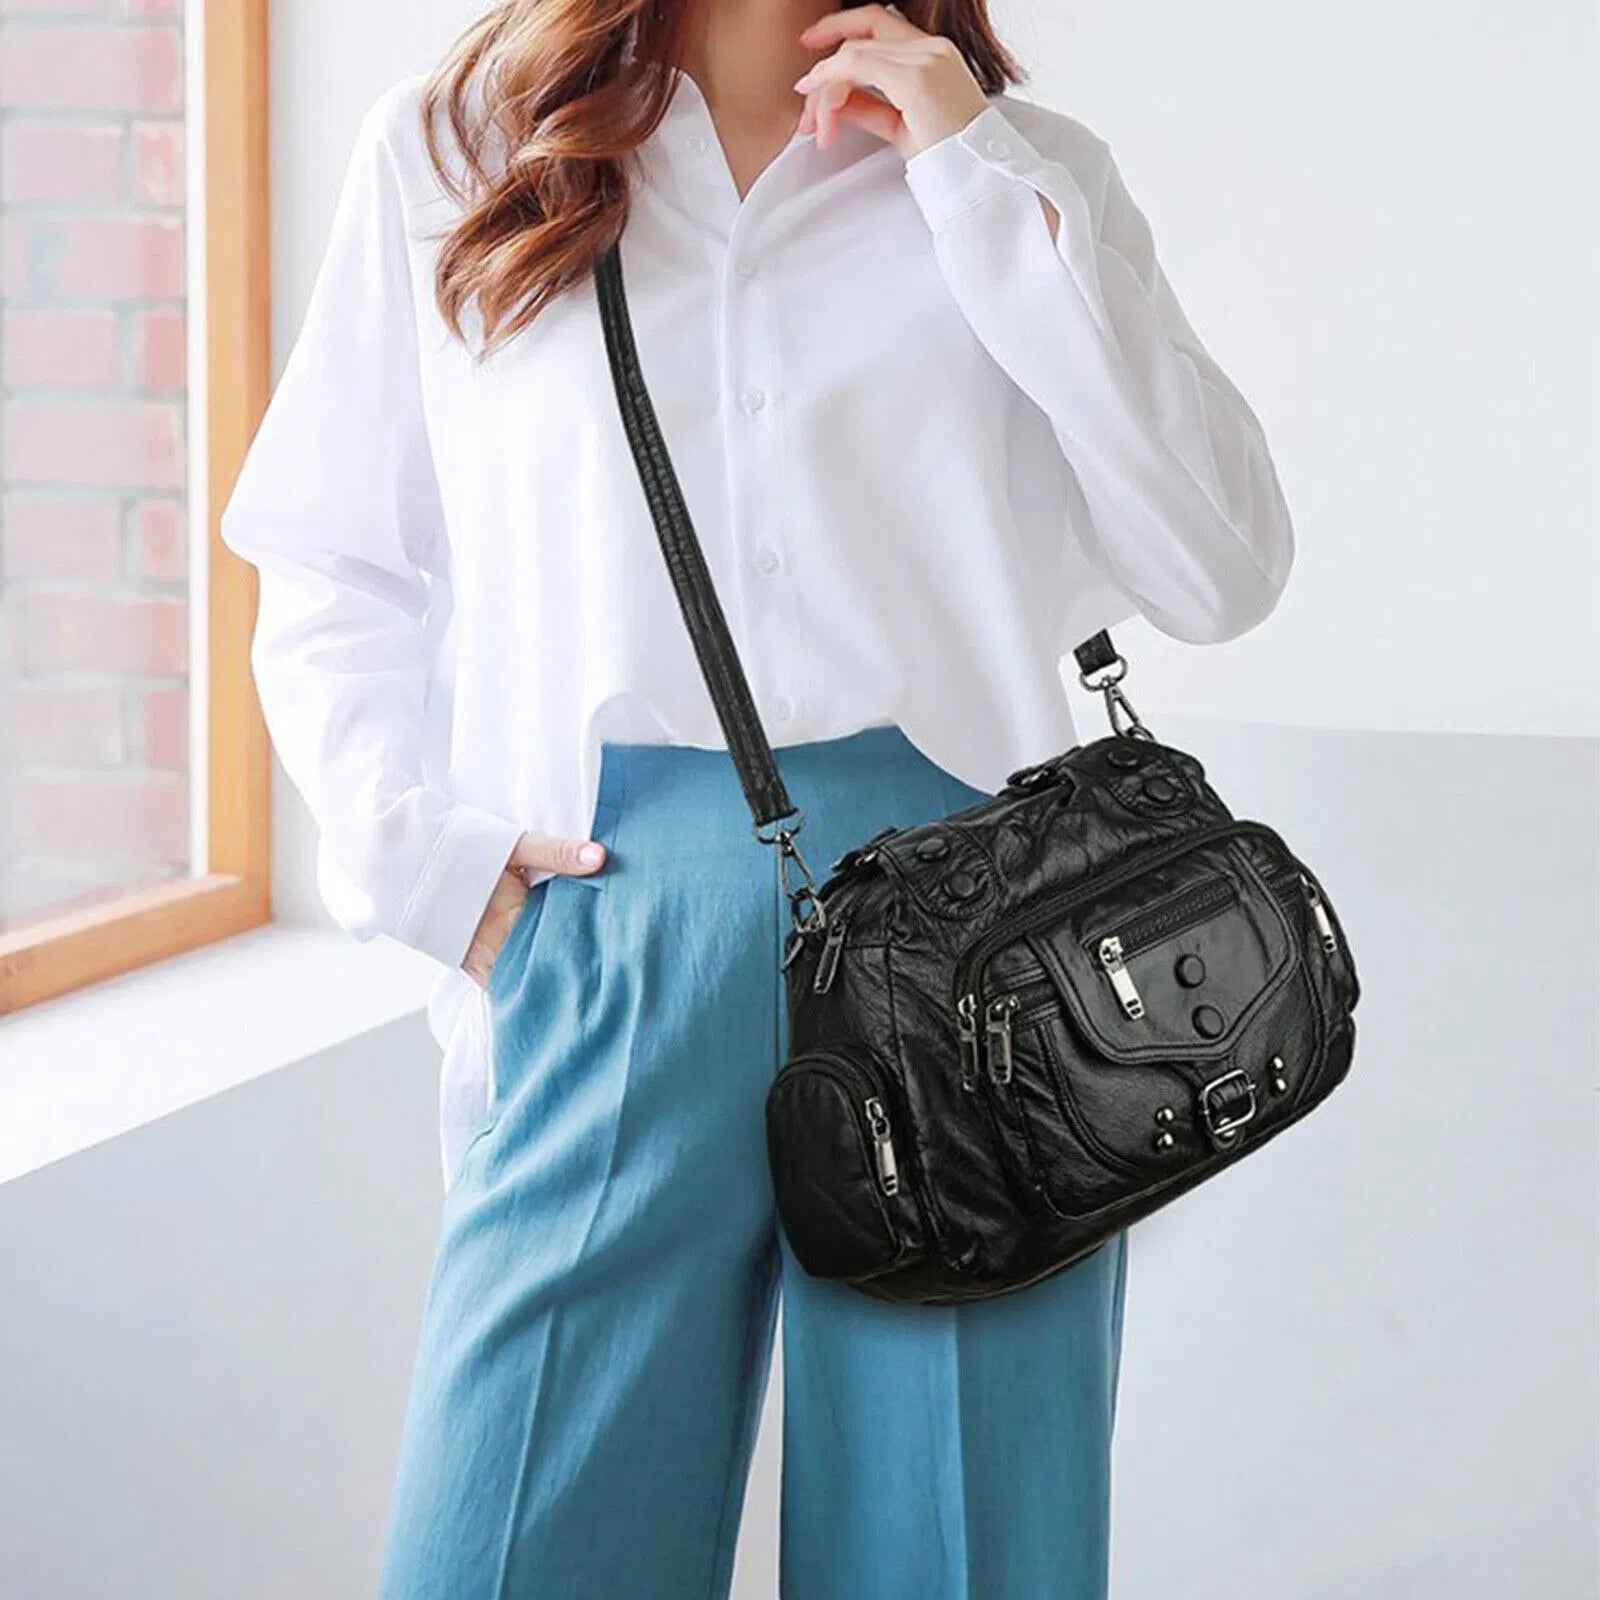 Soft Women Bag Faux Leather Large Shoulder Tote Crossbody Hobo Bag Handbag Purse